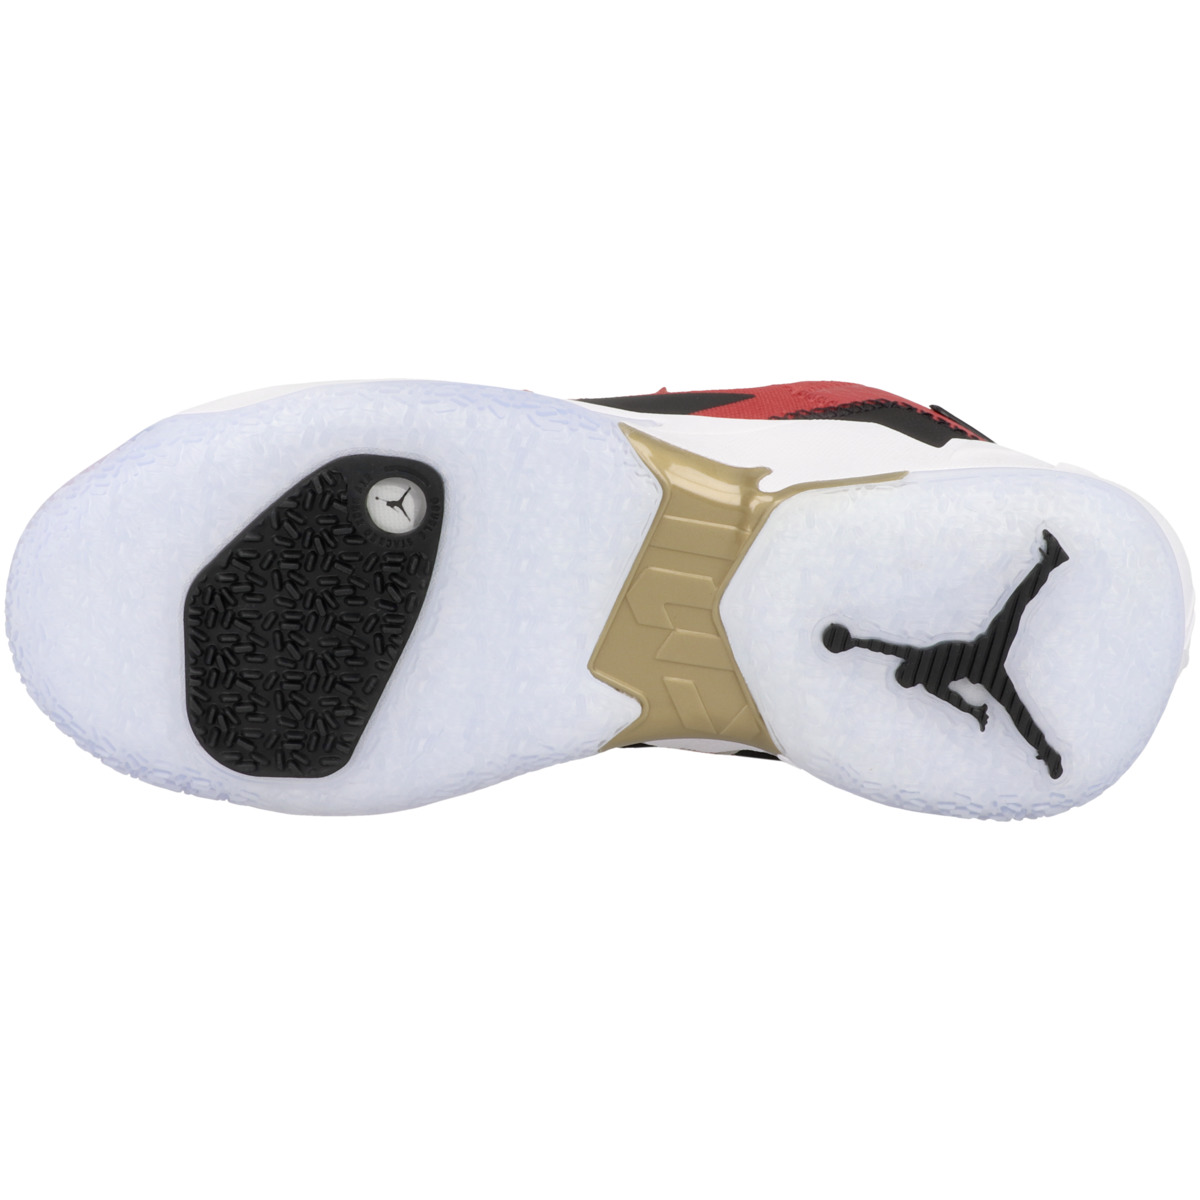 Nike Jordan Why Not Zer0.4 Sneaker rot